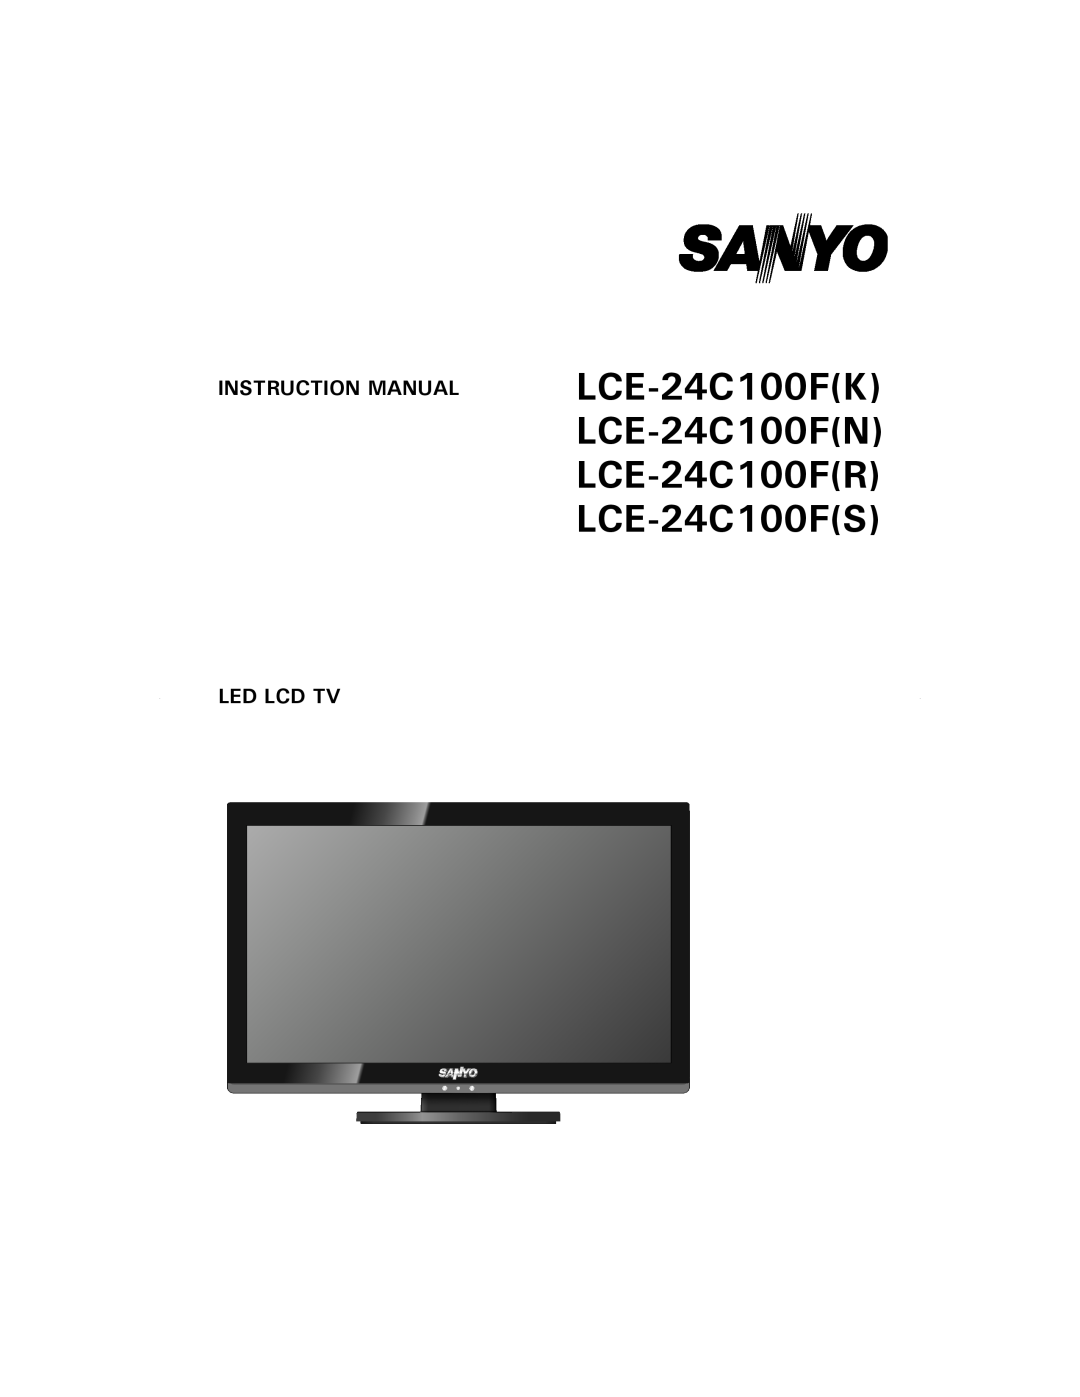 Sanyo LCE-24C100F(N) instruction manual Instruction Manual Led Lcd Tv, LCE-24C100FK LCE-24C100FN LCE-24C100FR LCE-24C100FS 